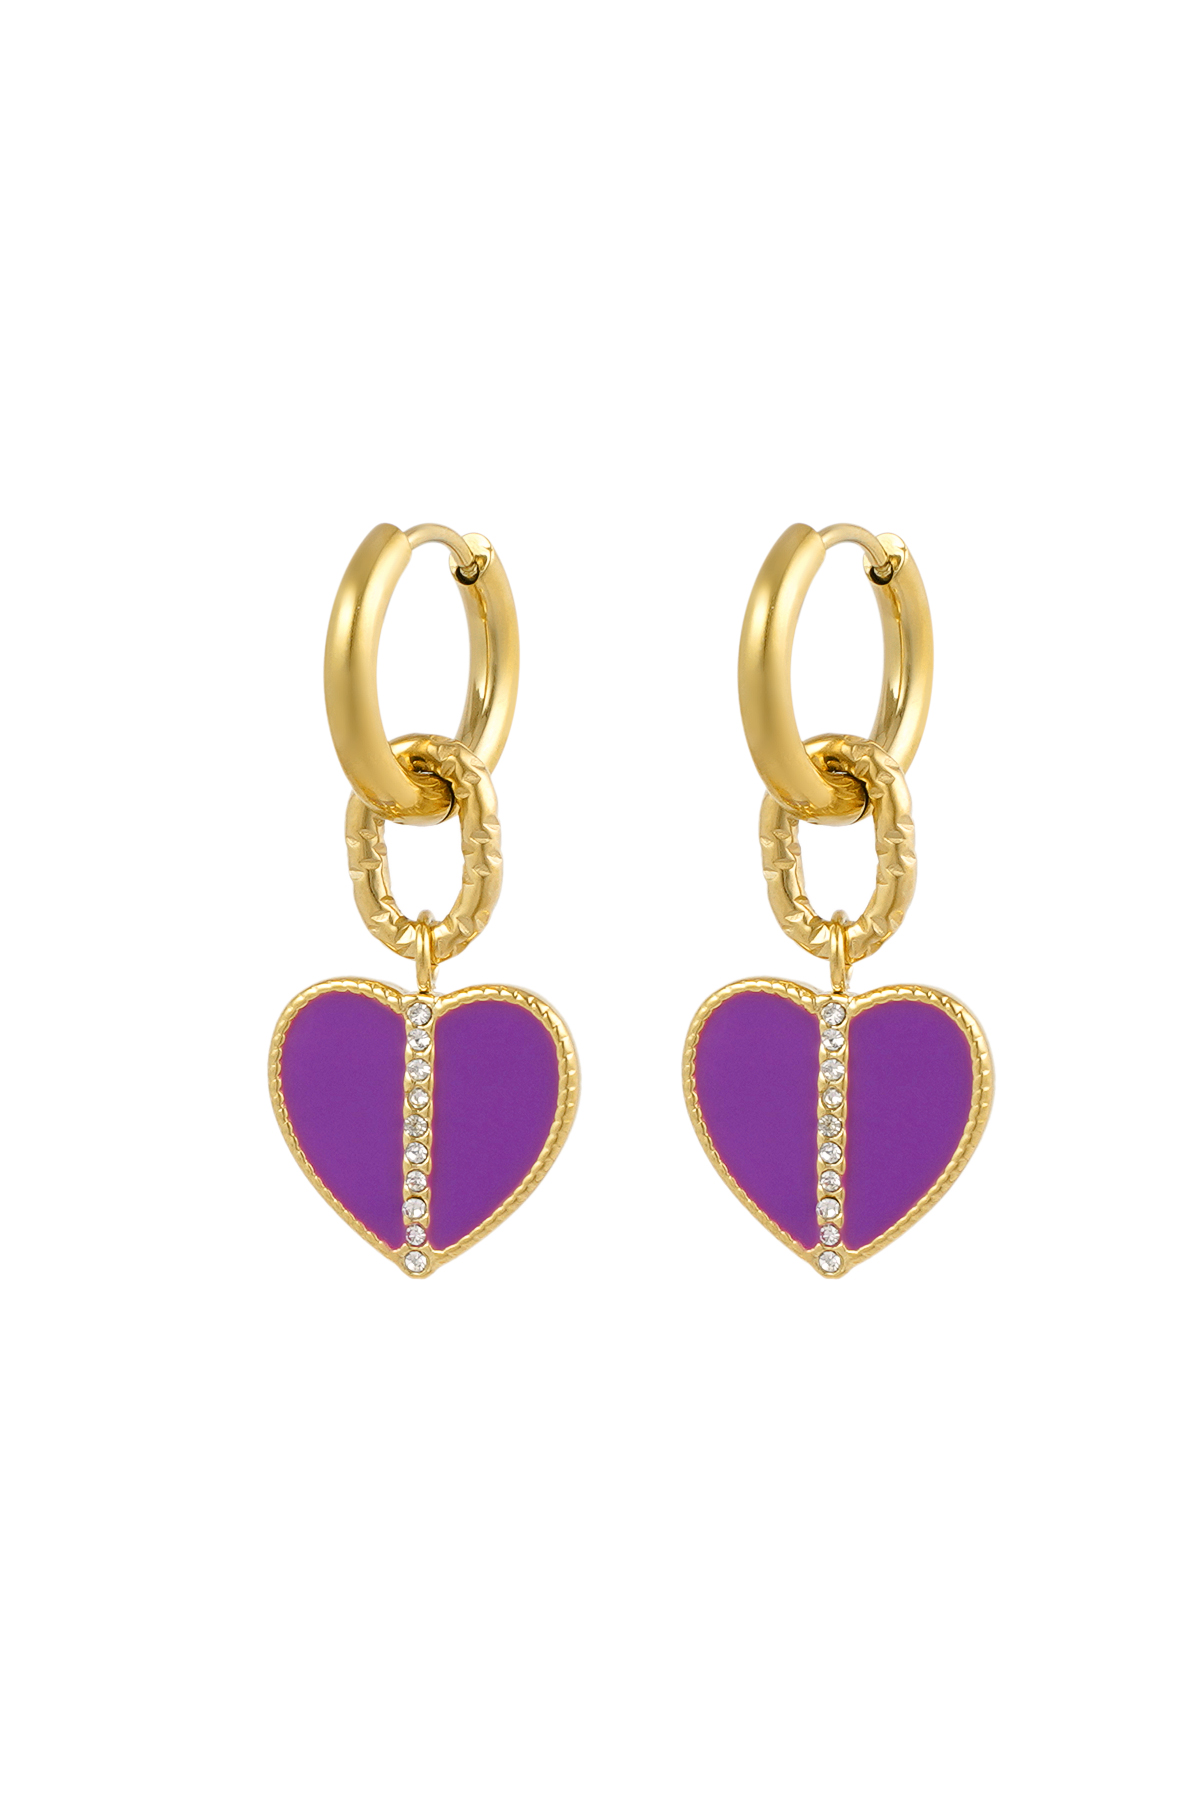 Earrings dancing dare - purple